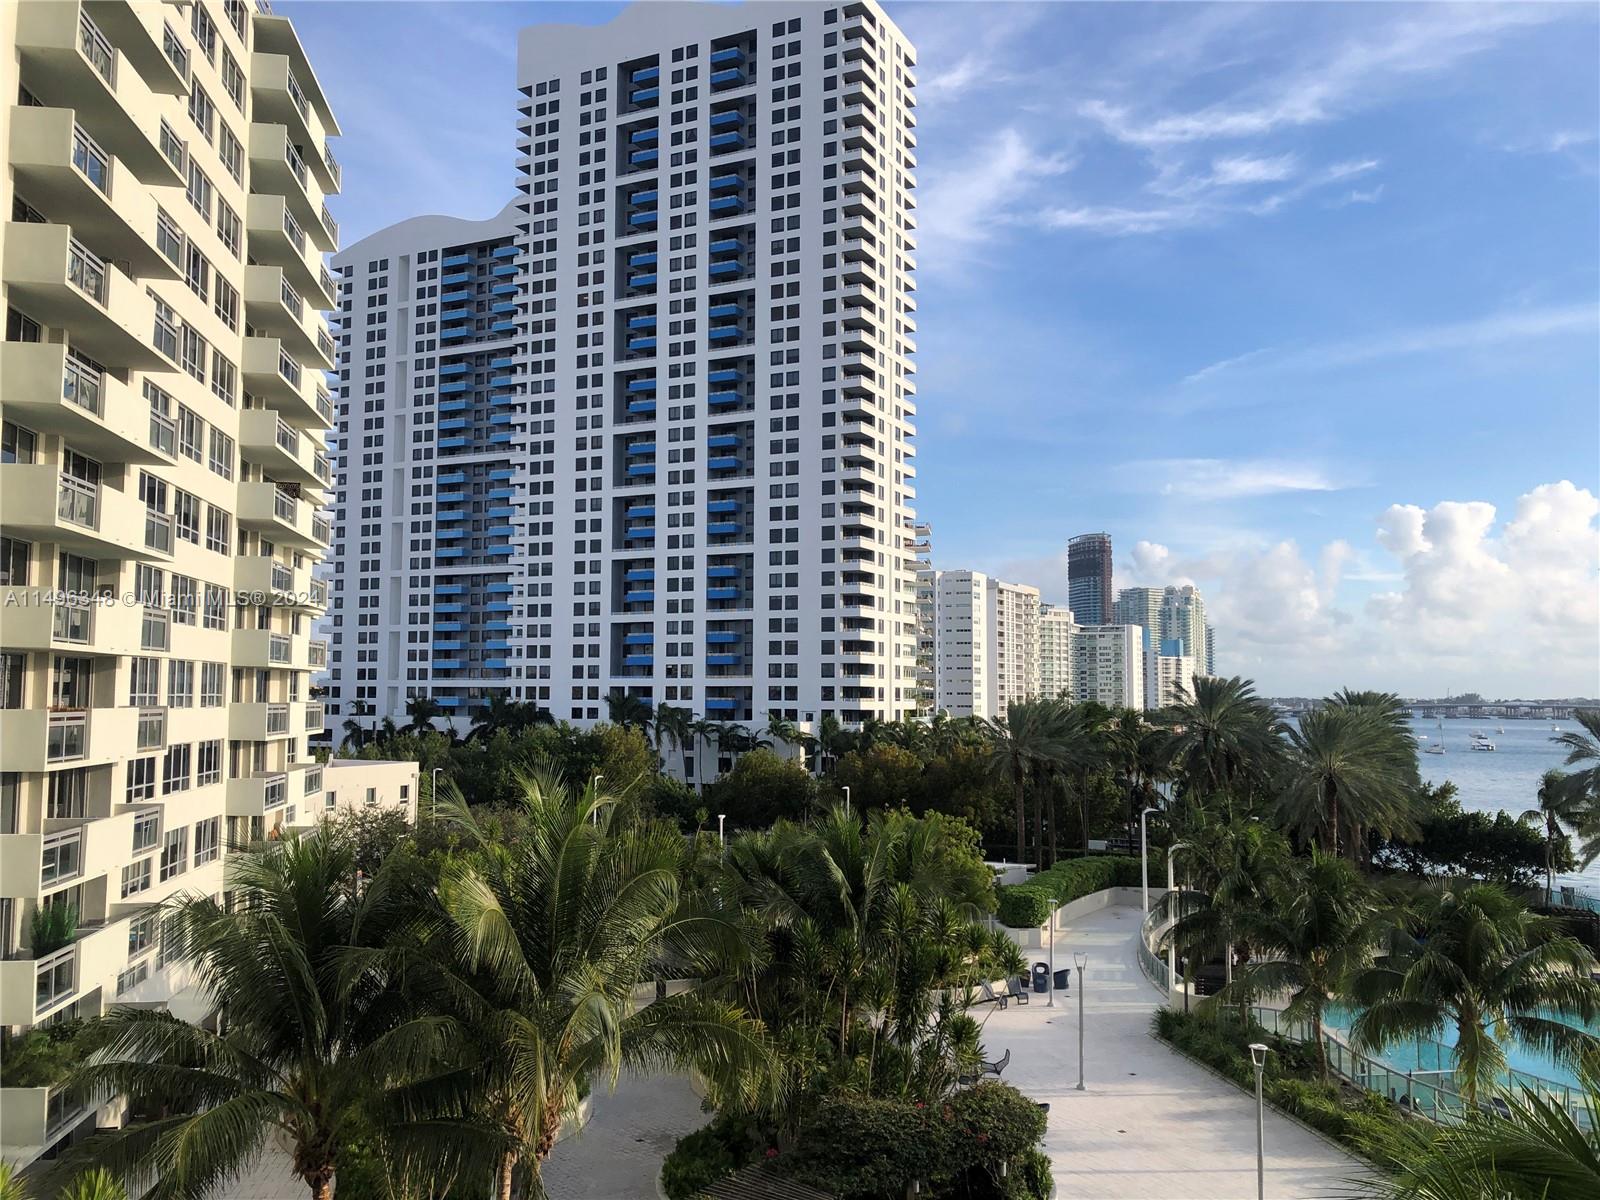 Property for Sale at 1500 Bay Rd Rd 528S, Miami Beach, Miami-Dade County, Florida - Bedrooms: 2 
Bathrooms: 2  - $725,000